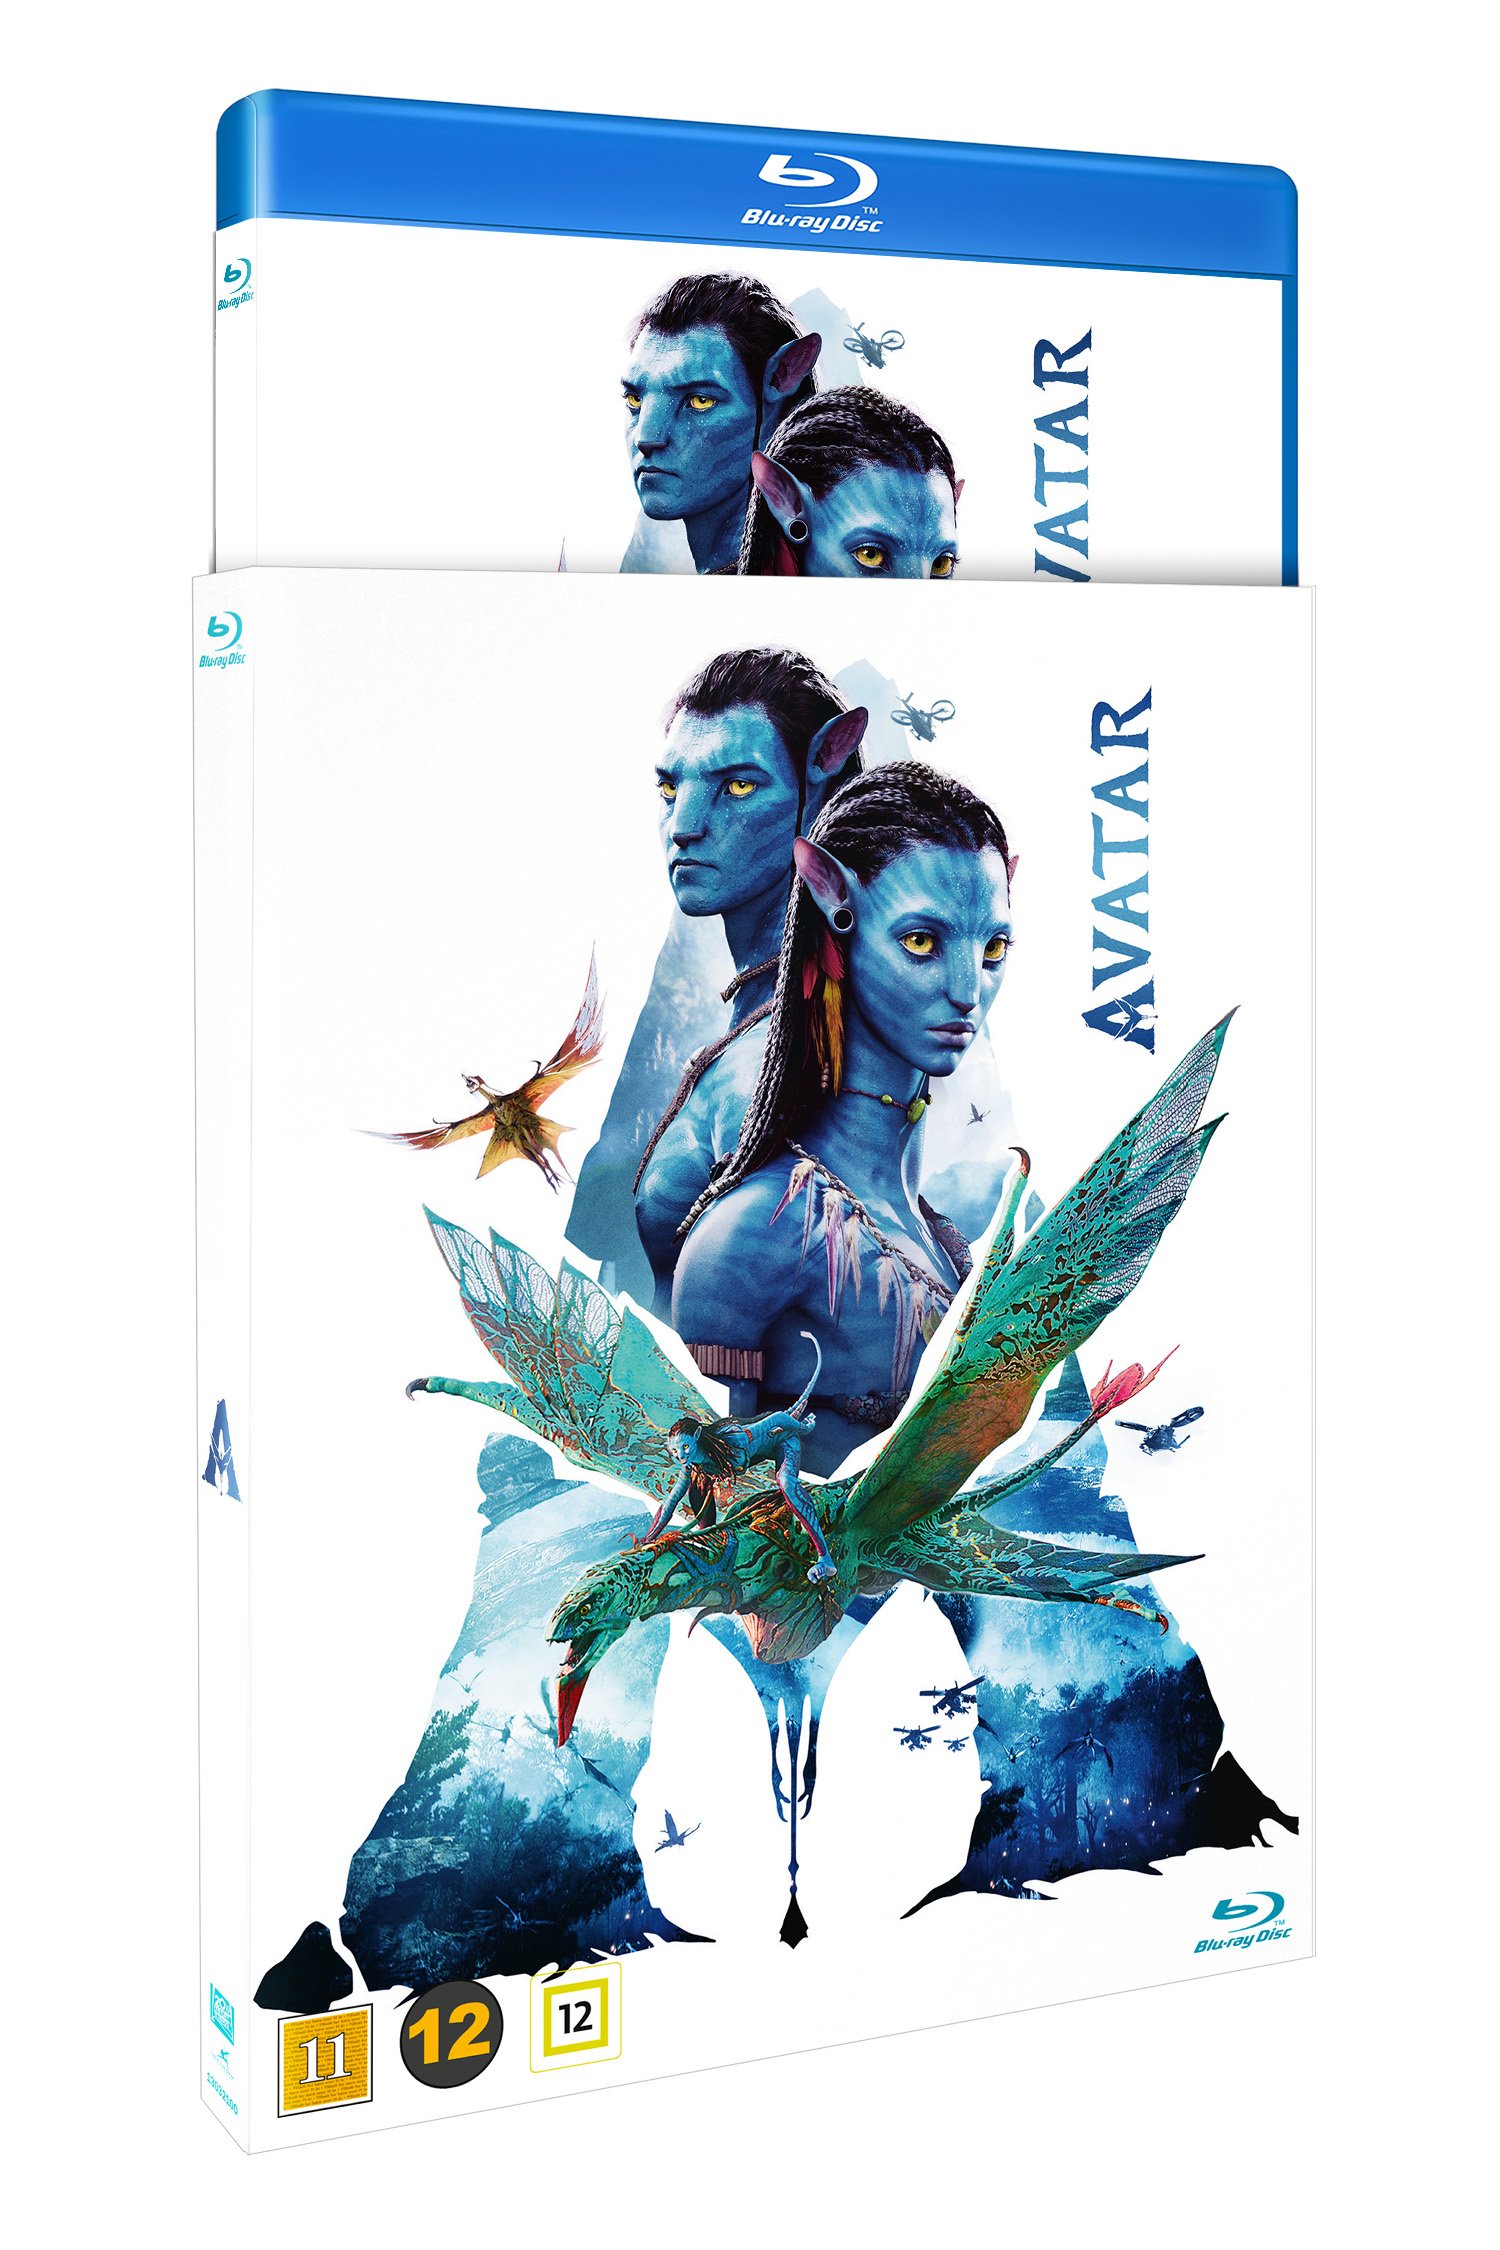 Buy Avatar 4K BluRay Standard Free shipping